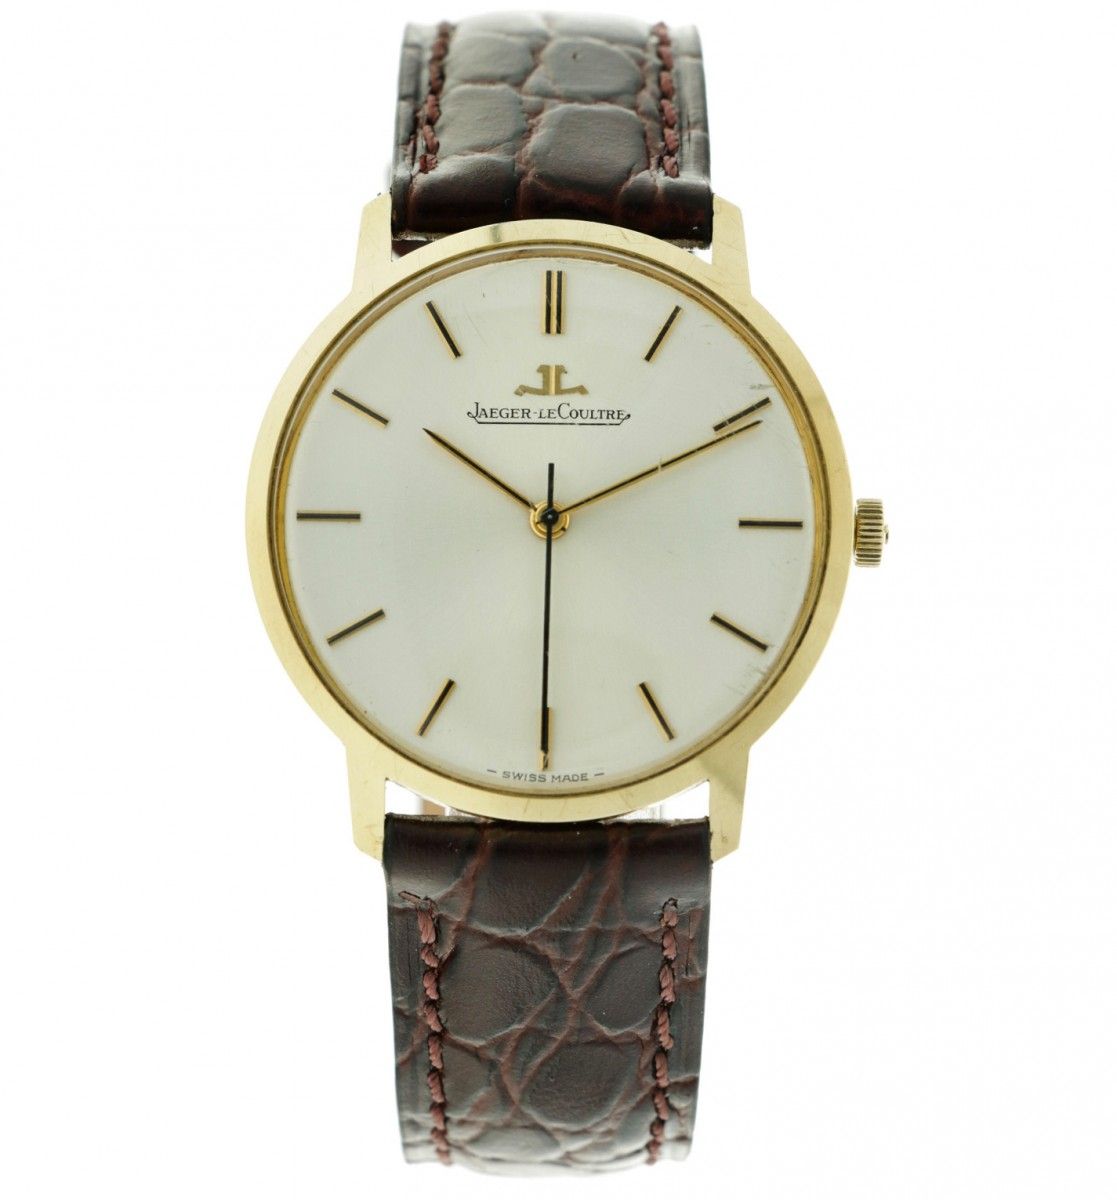 Jaeger-LeCoultre - Men's watch - apprx. 1970. Gehäuse: Gelbgold (18 kt.) - Armba&hellip;